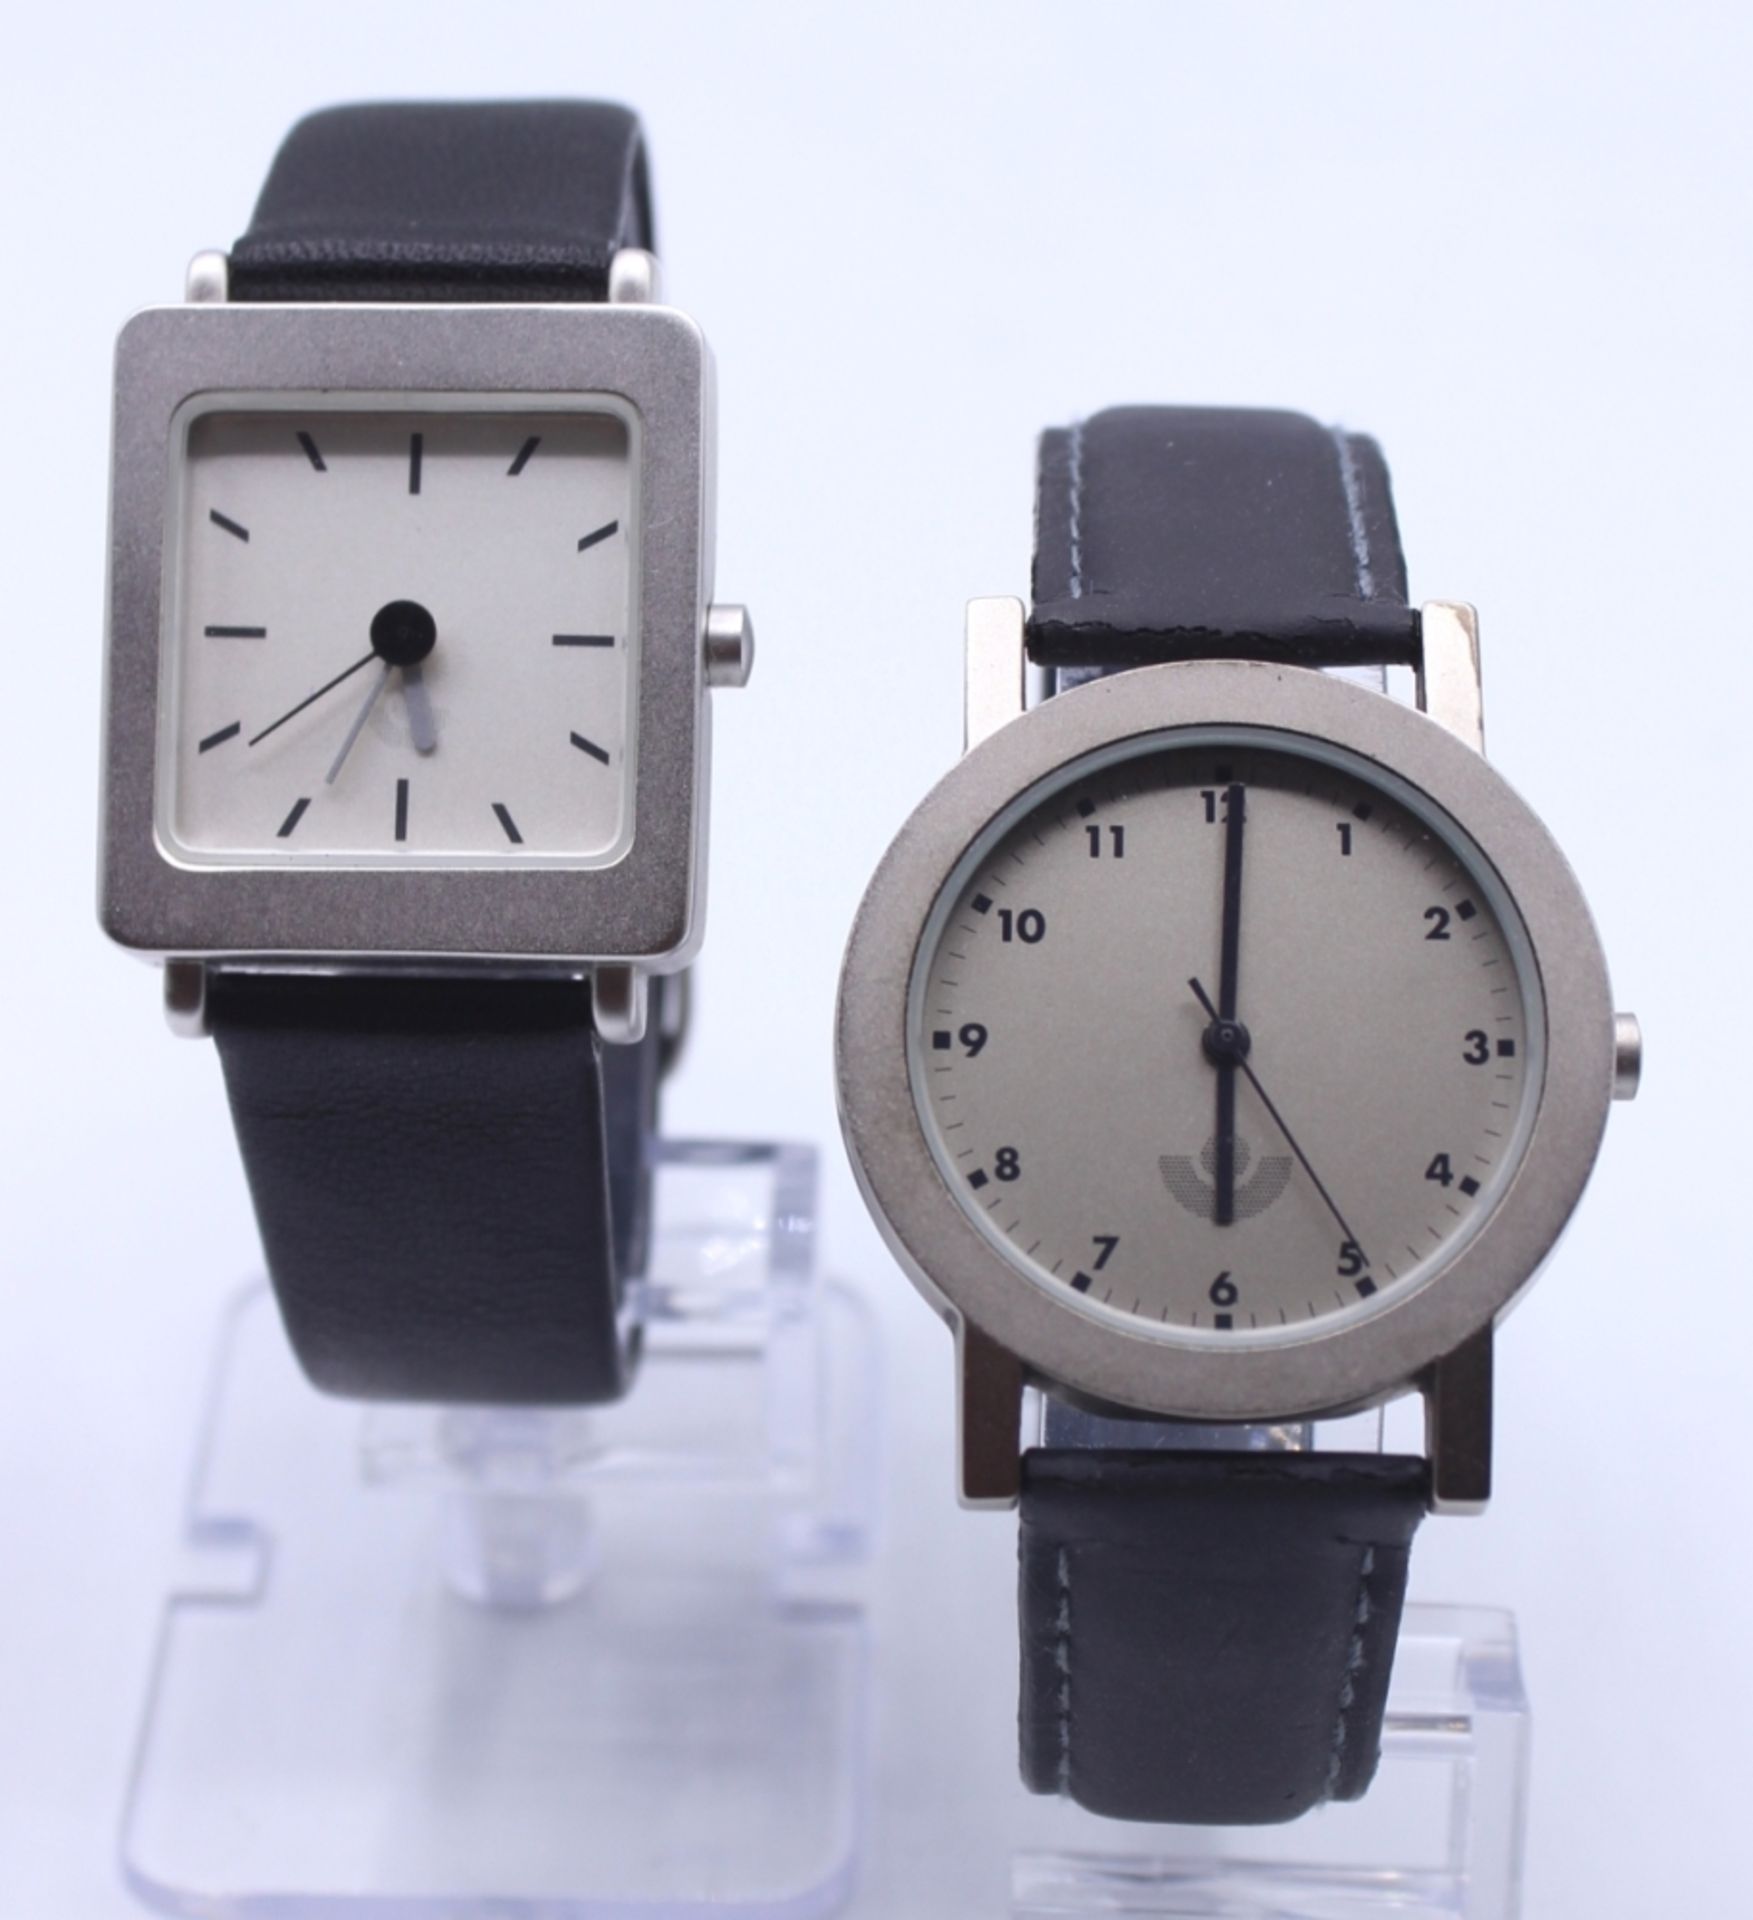 Paar Armbanduhren - Marke Lexon Modell Domino und Modell Laser, mattiertes Metallgehäuse, u.a.